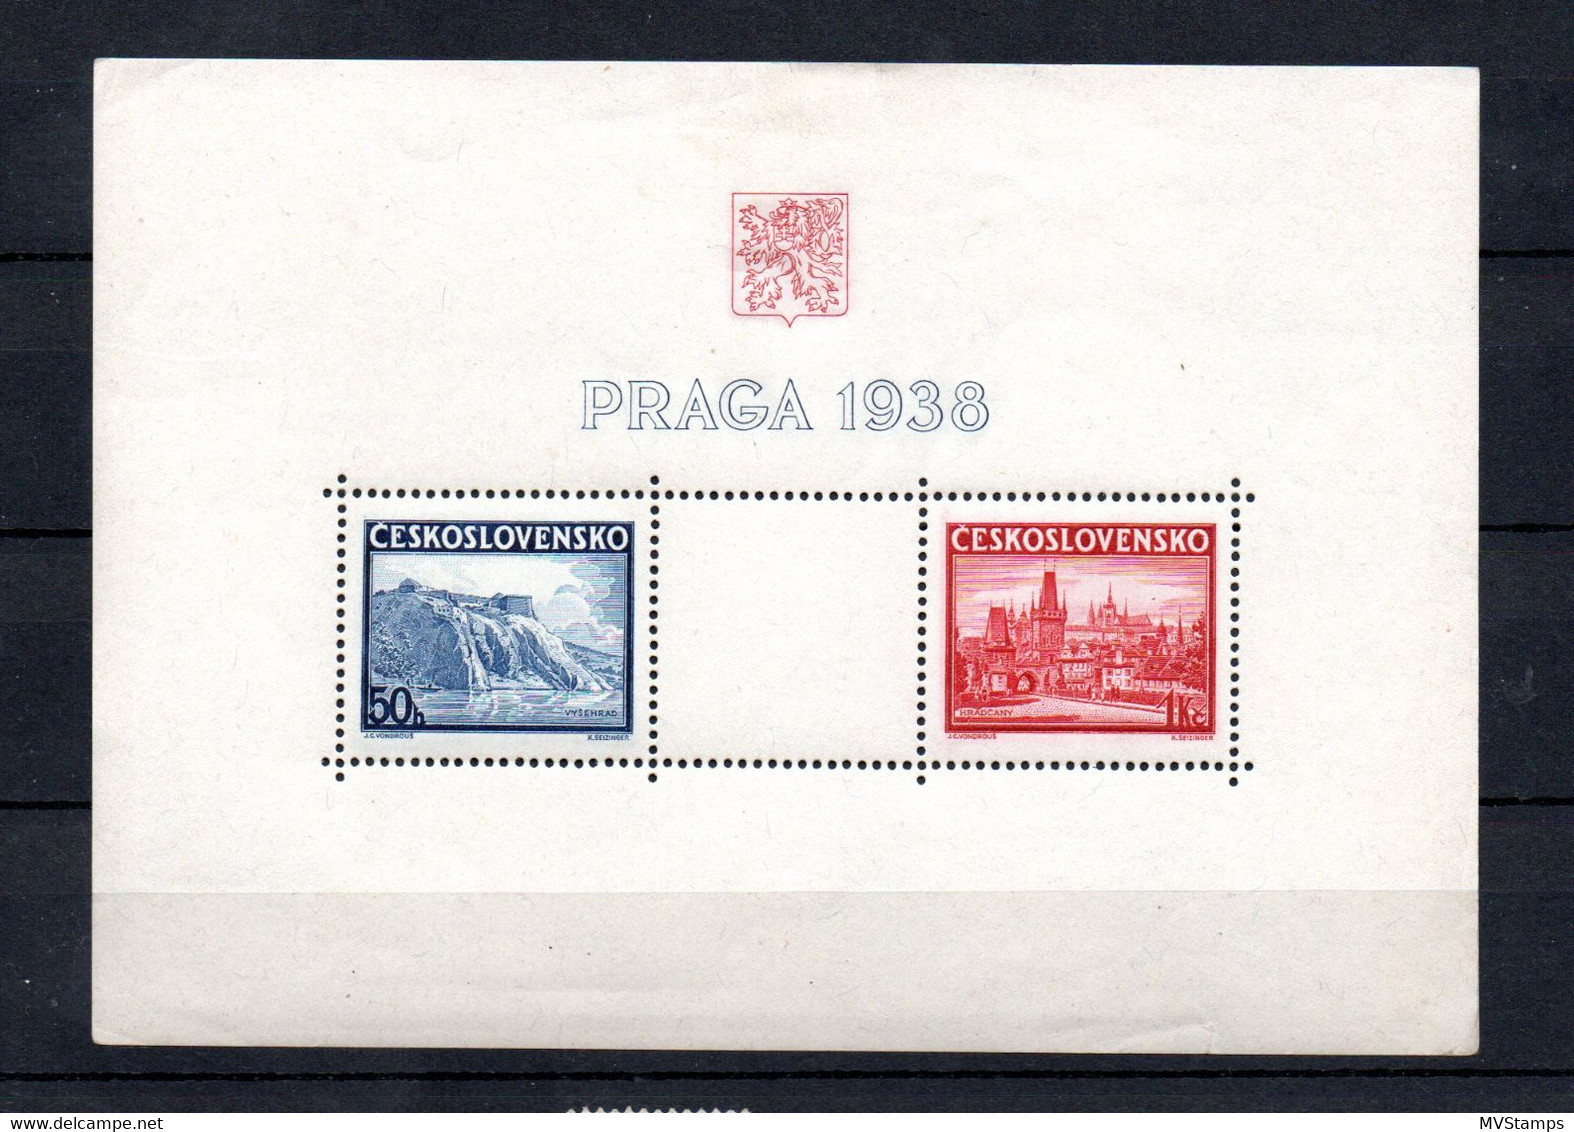 Czechoslovakia 1938 Sheet "Praha 1938" Stamps (Michel Block 4) Nice MNH - Neufs